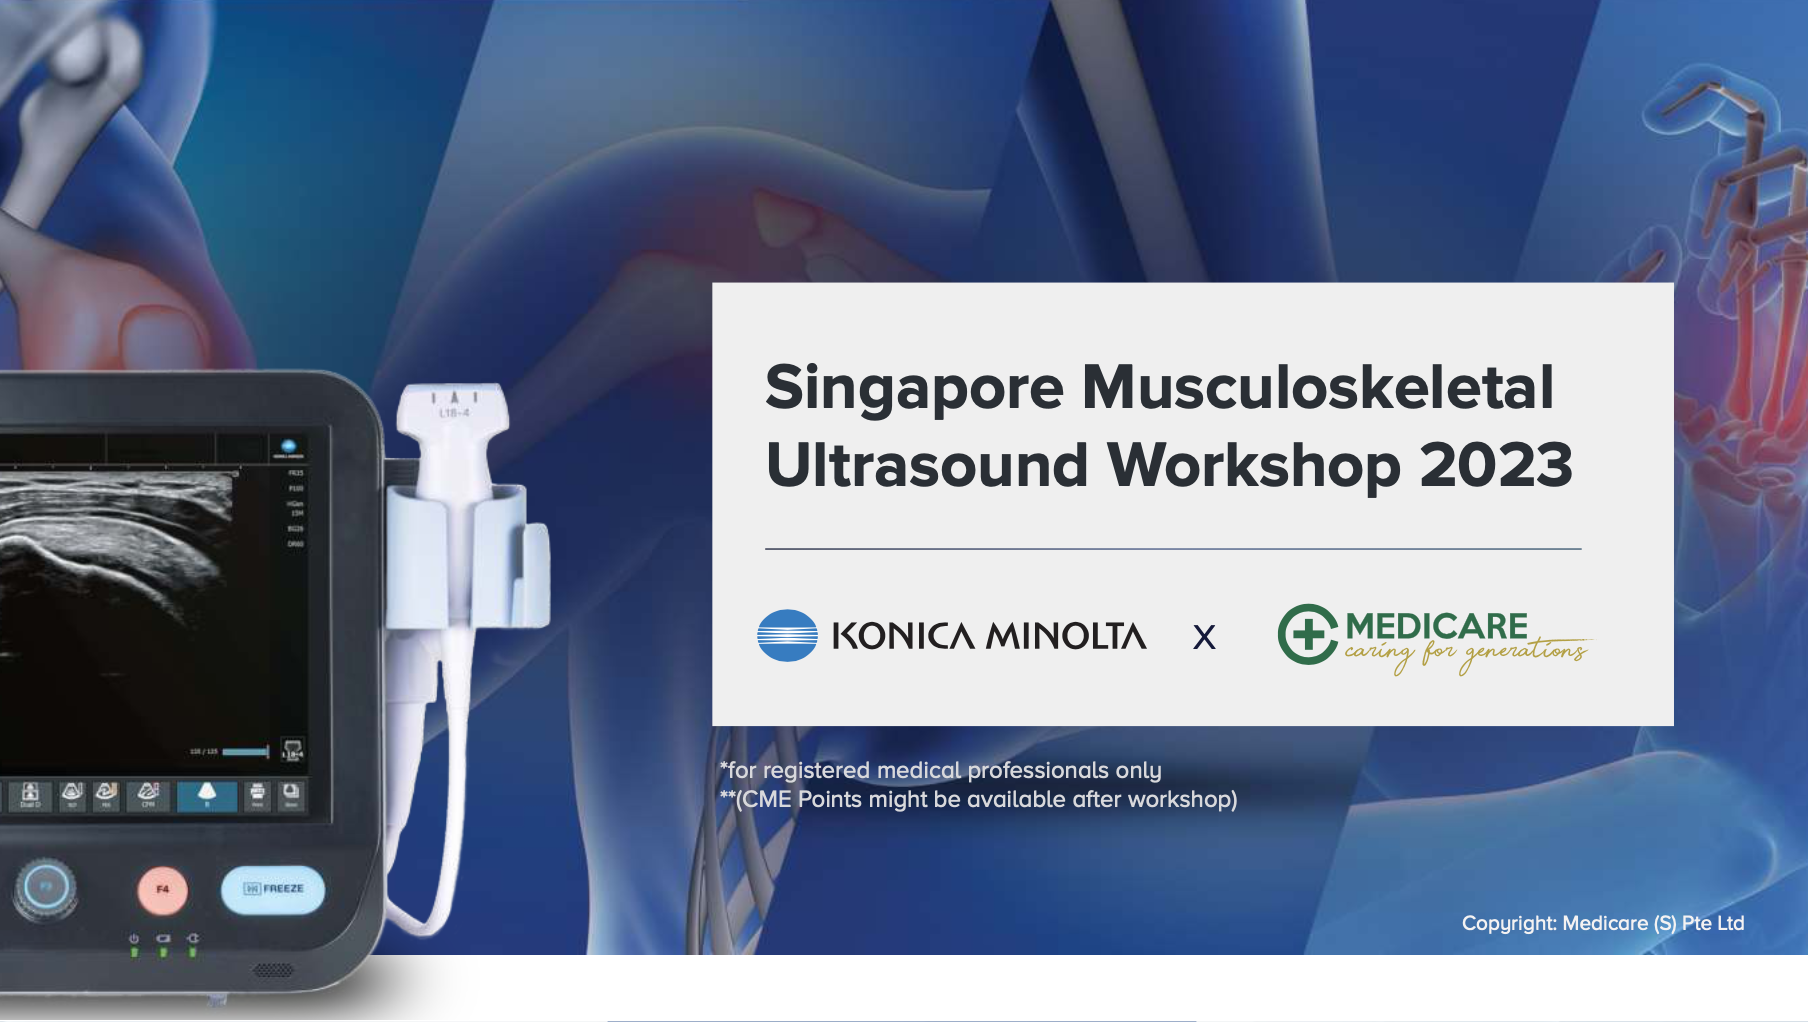 Konica Minolta MSK Workshop 12 August2023 Details